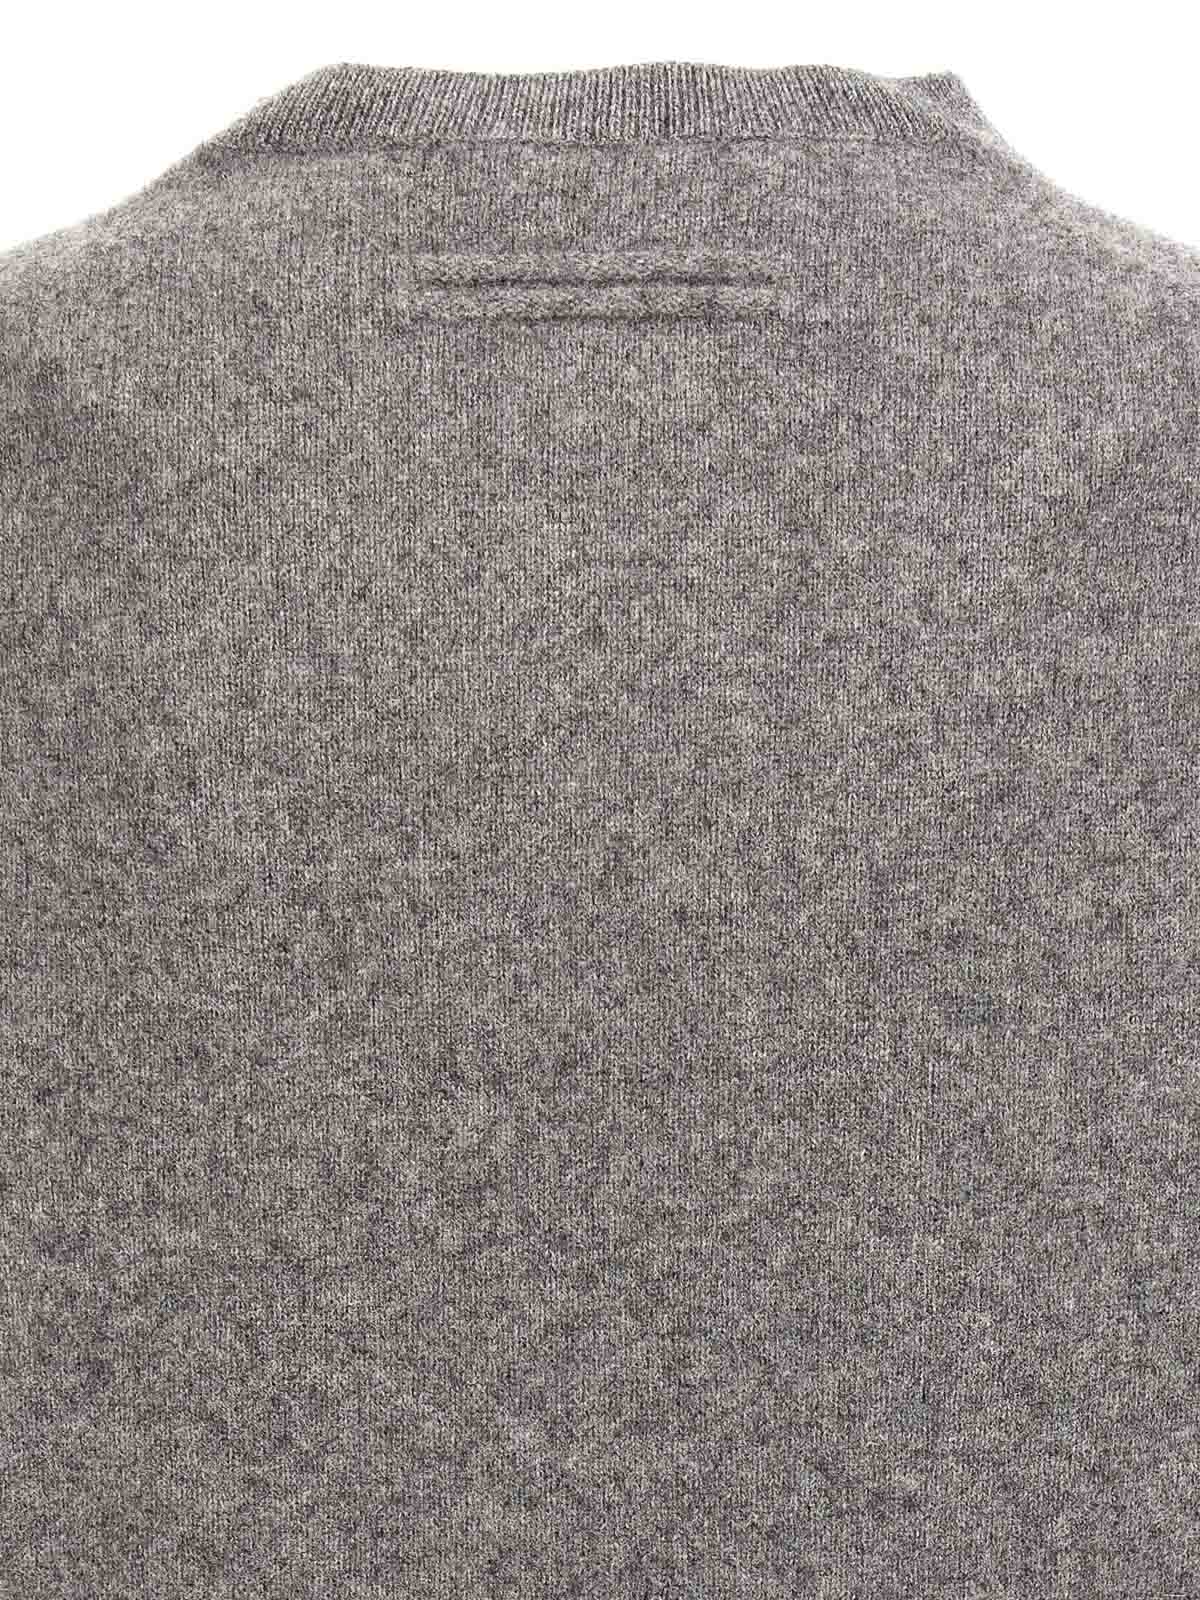 Zegna crew-neck wool jumper - Grey